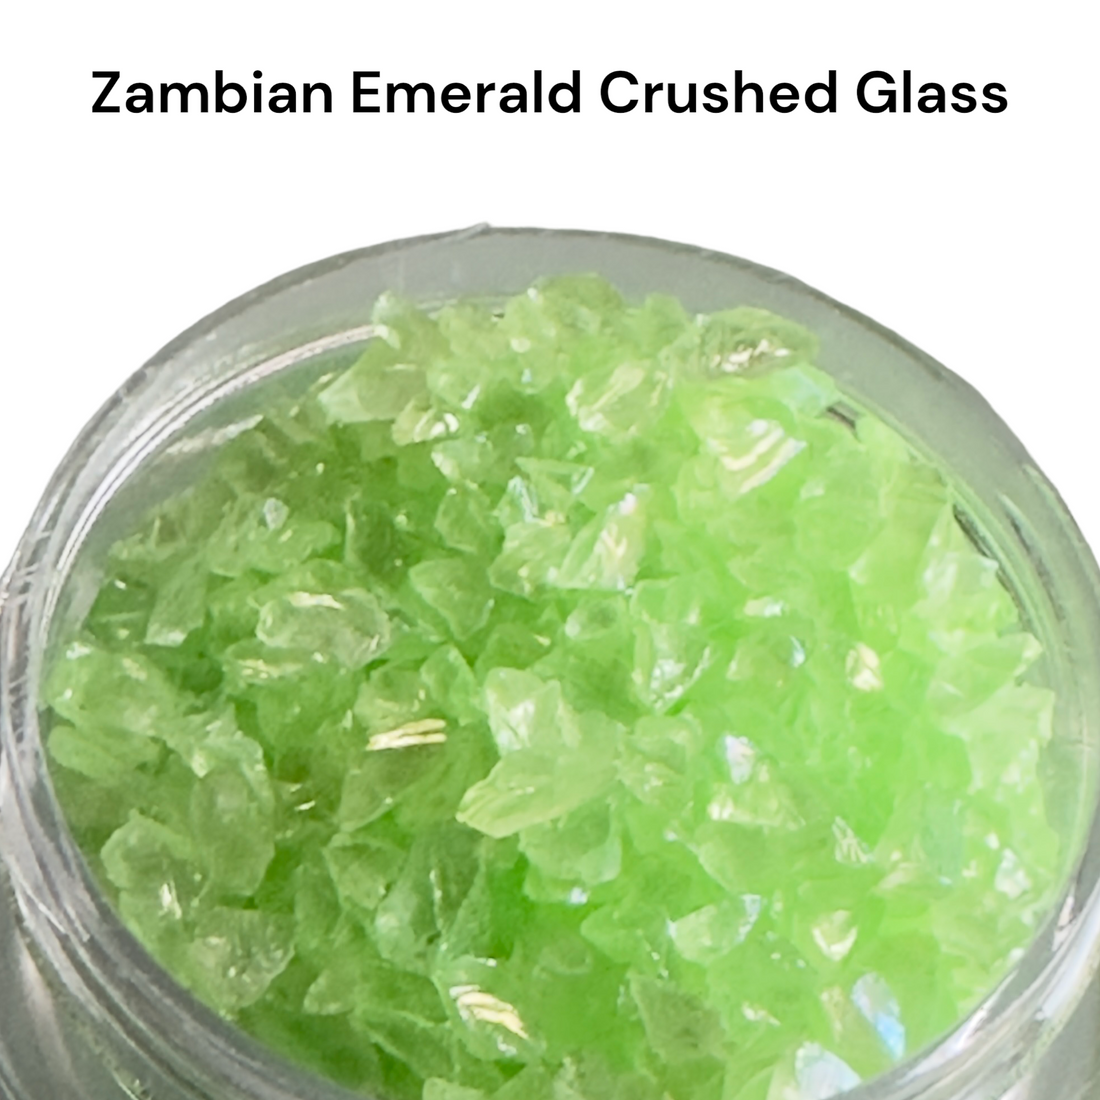 Zambian Emerald Crushed Glass